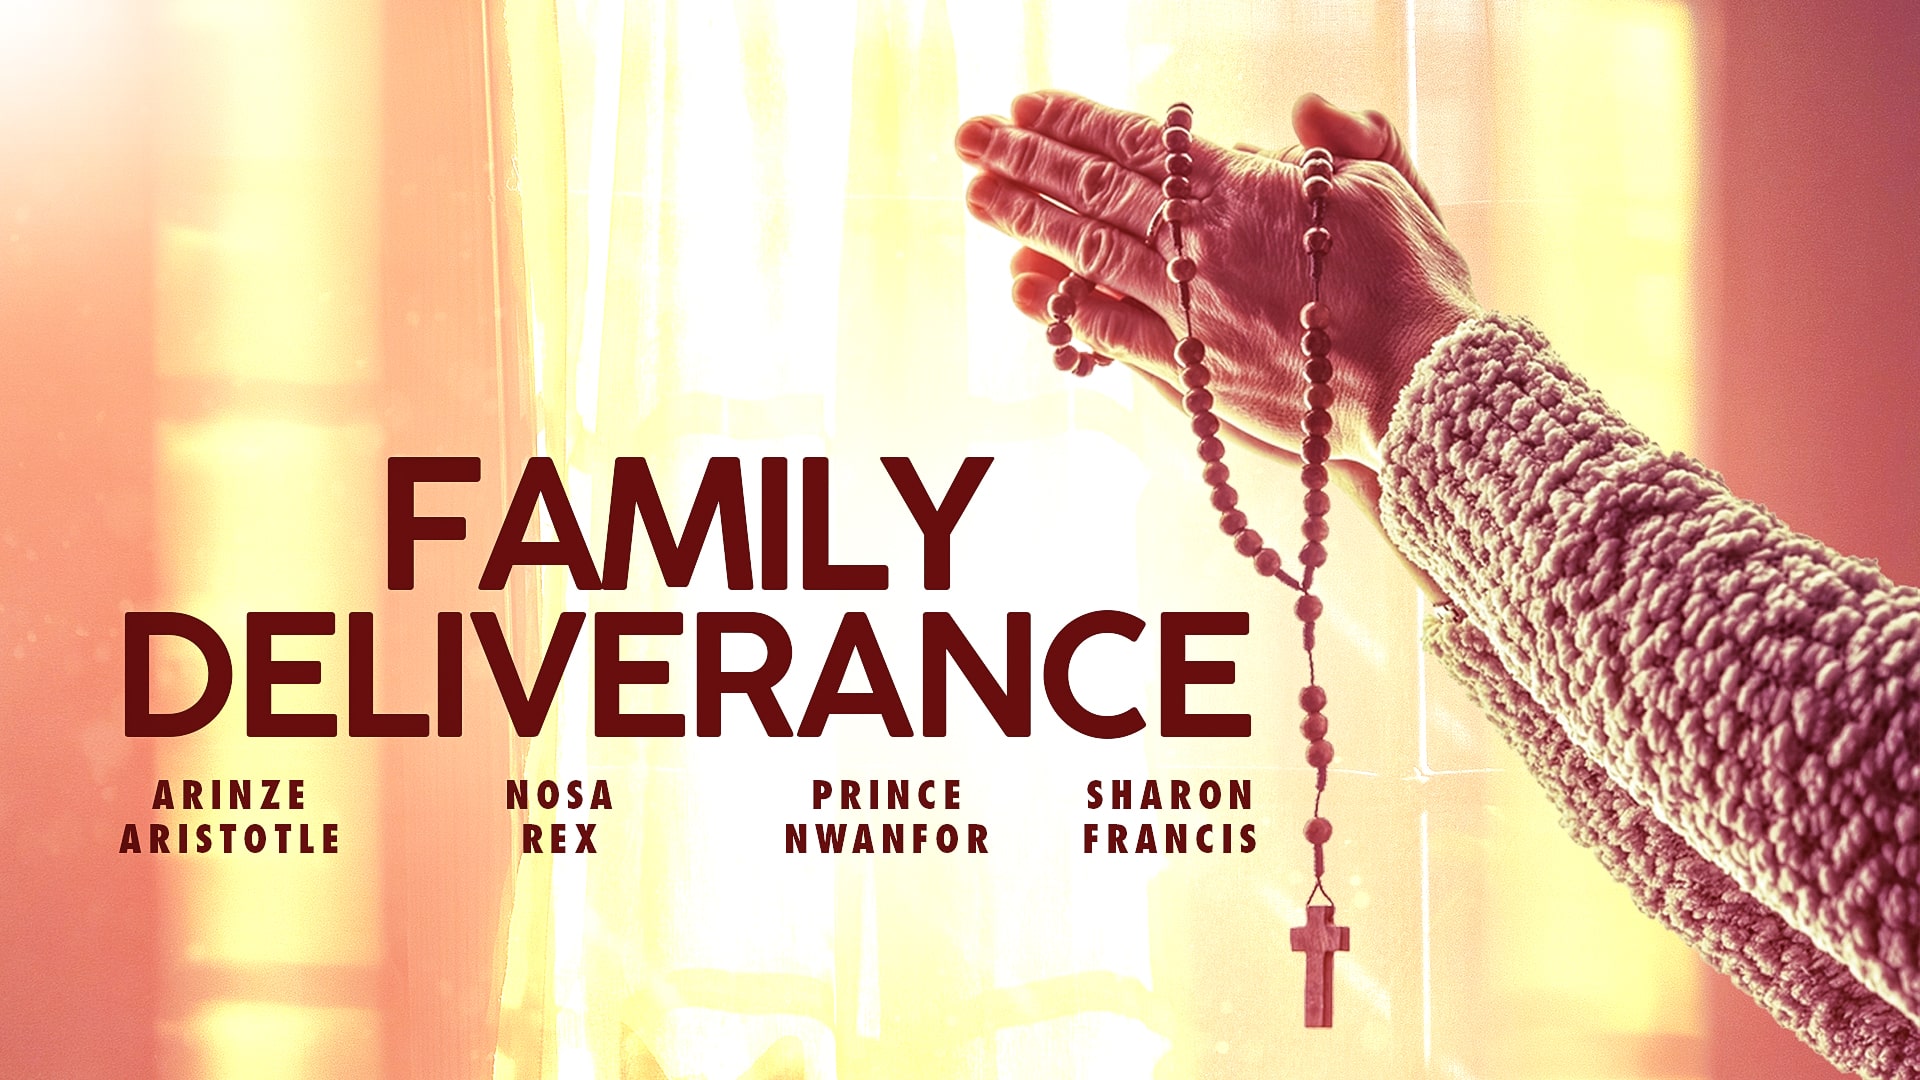 Family Deliverance